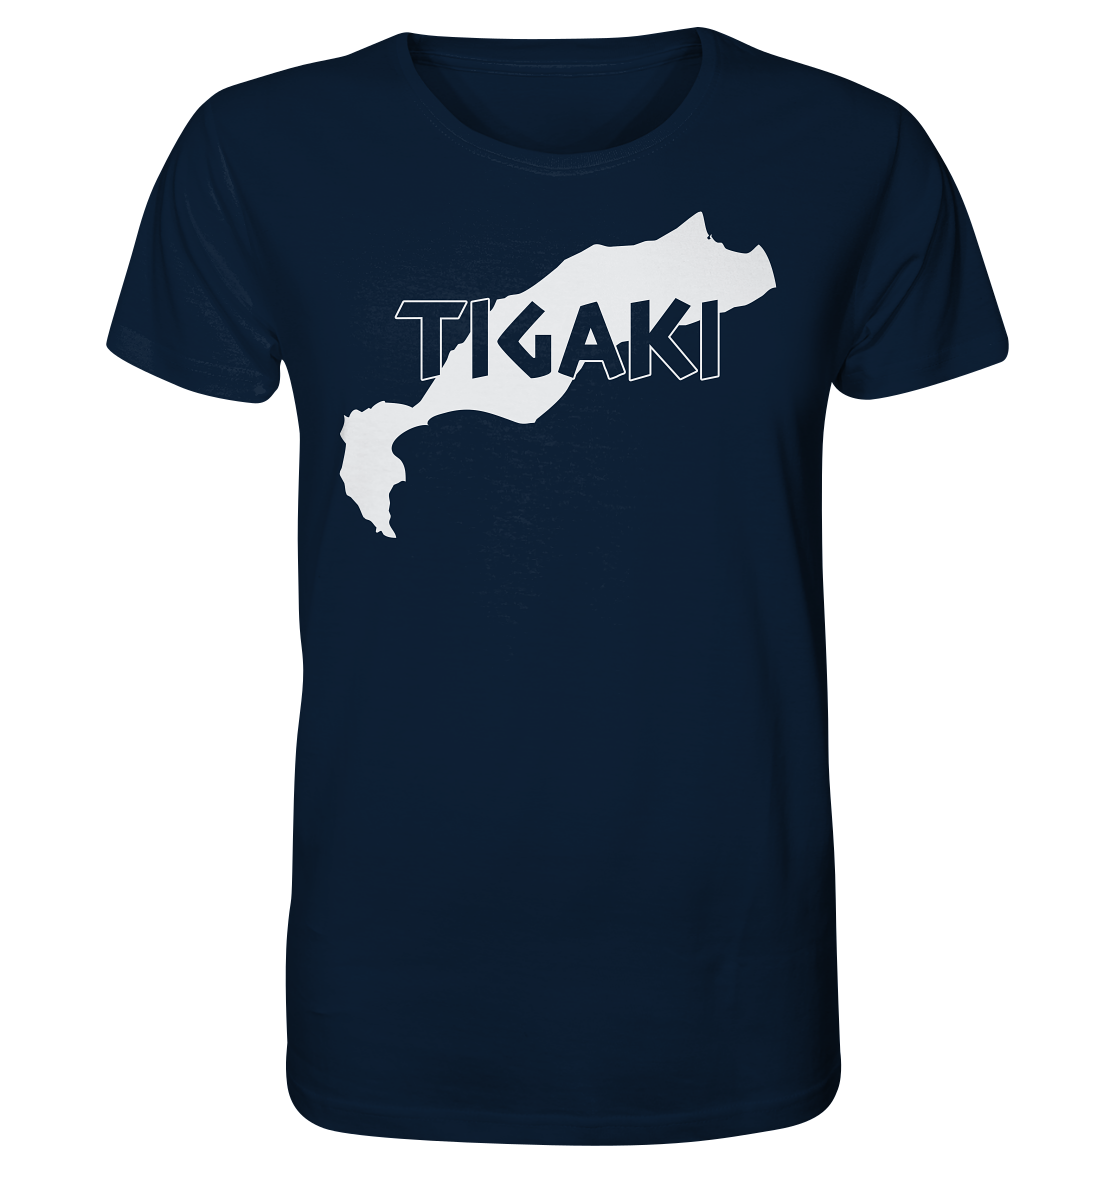 Tigaki Kos Silhouette - Organic Shirt